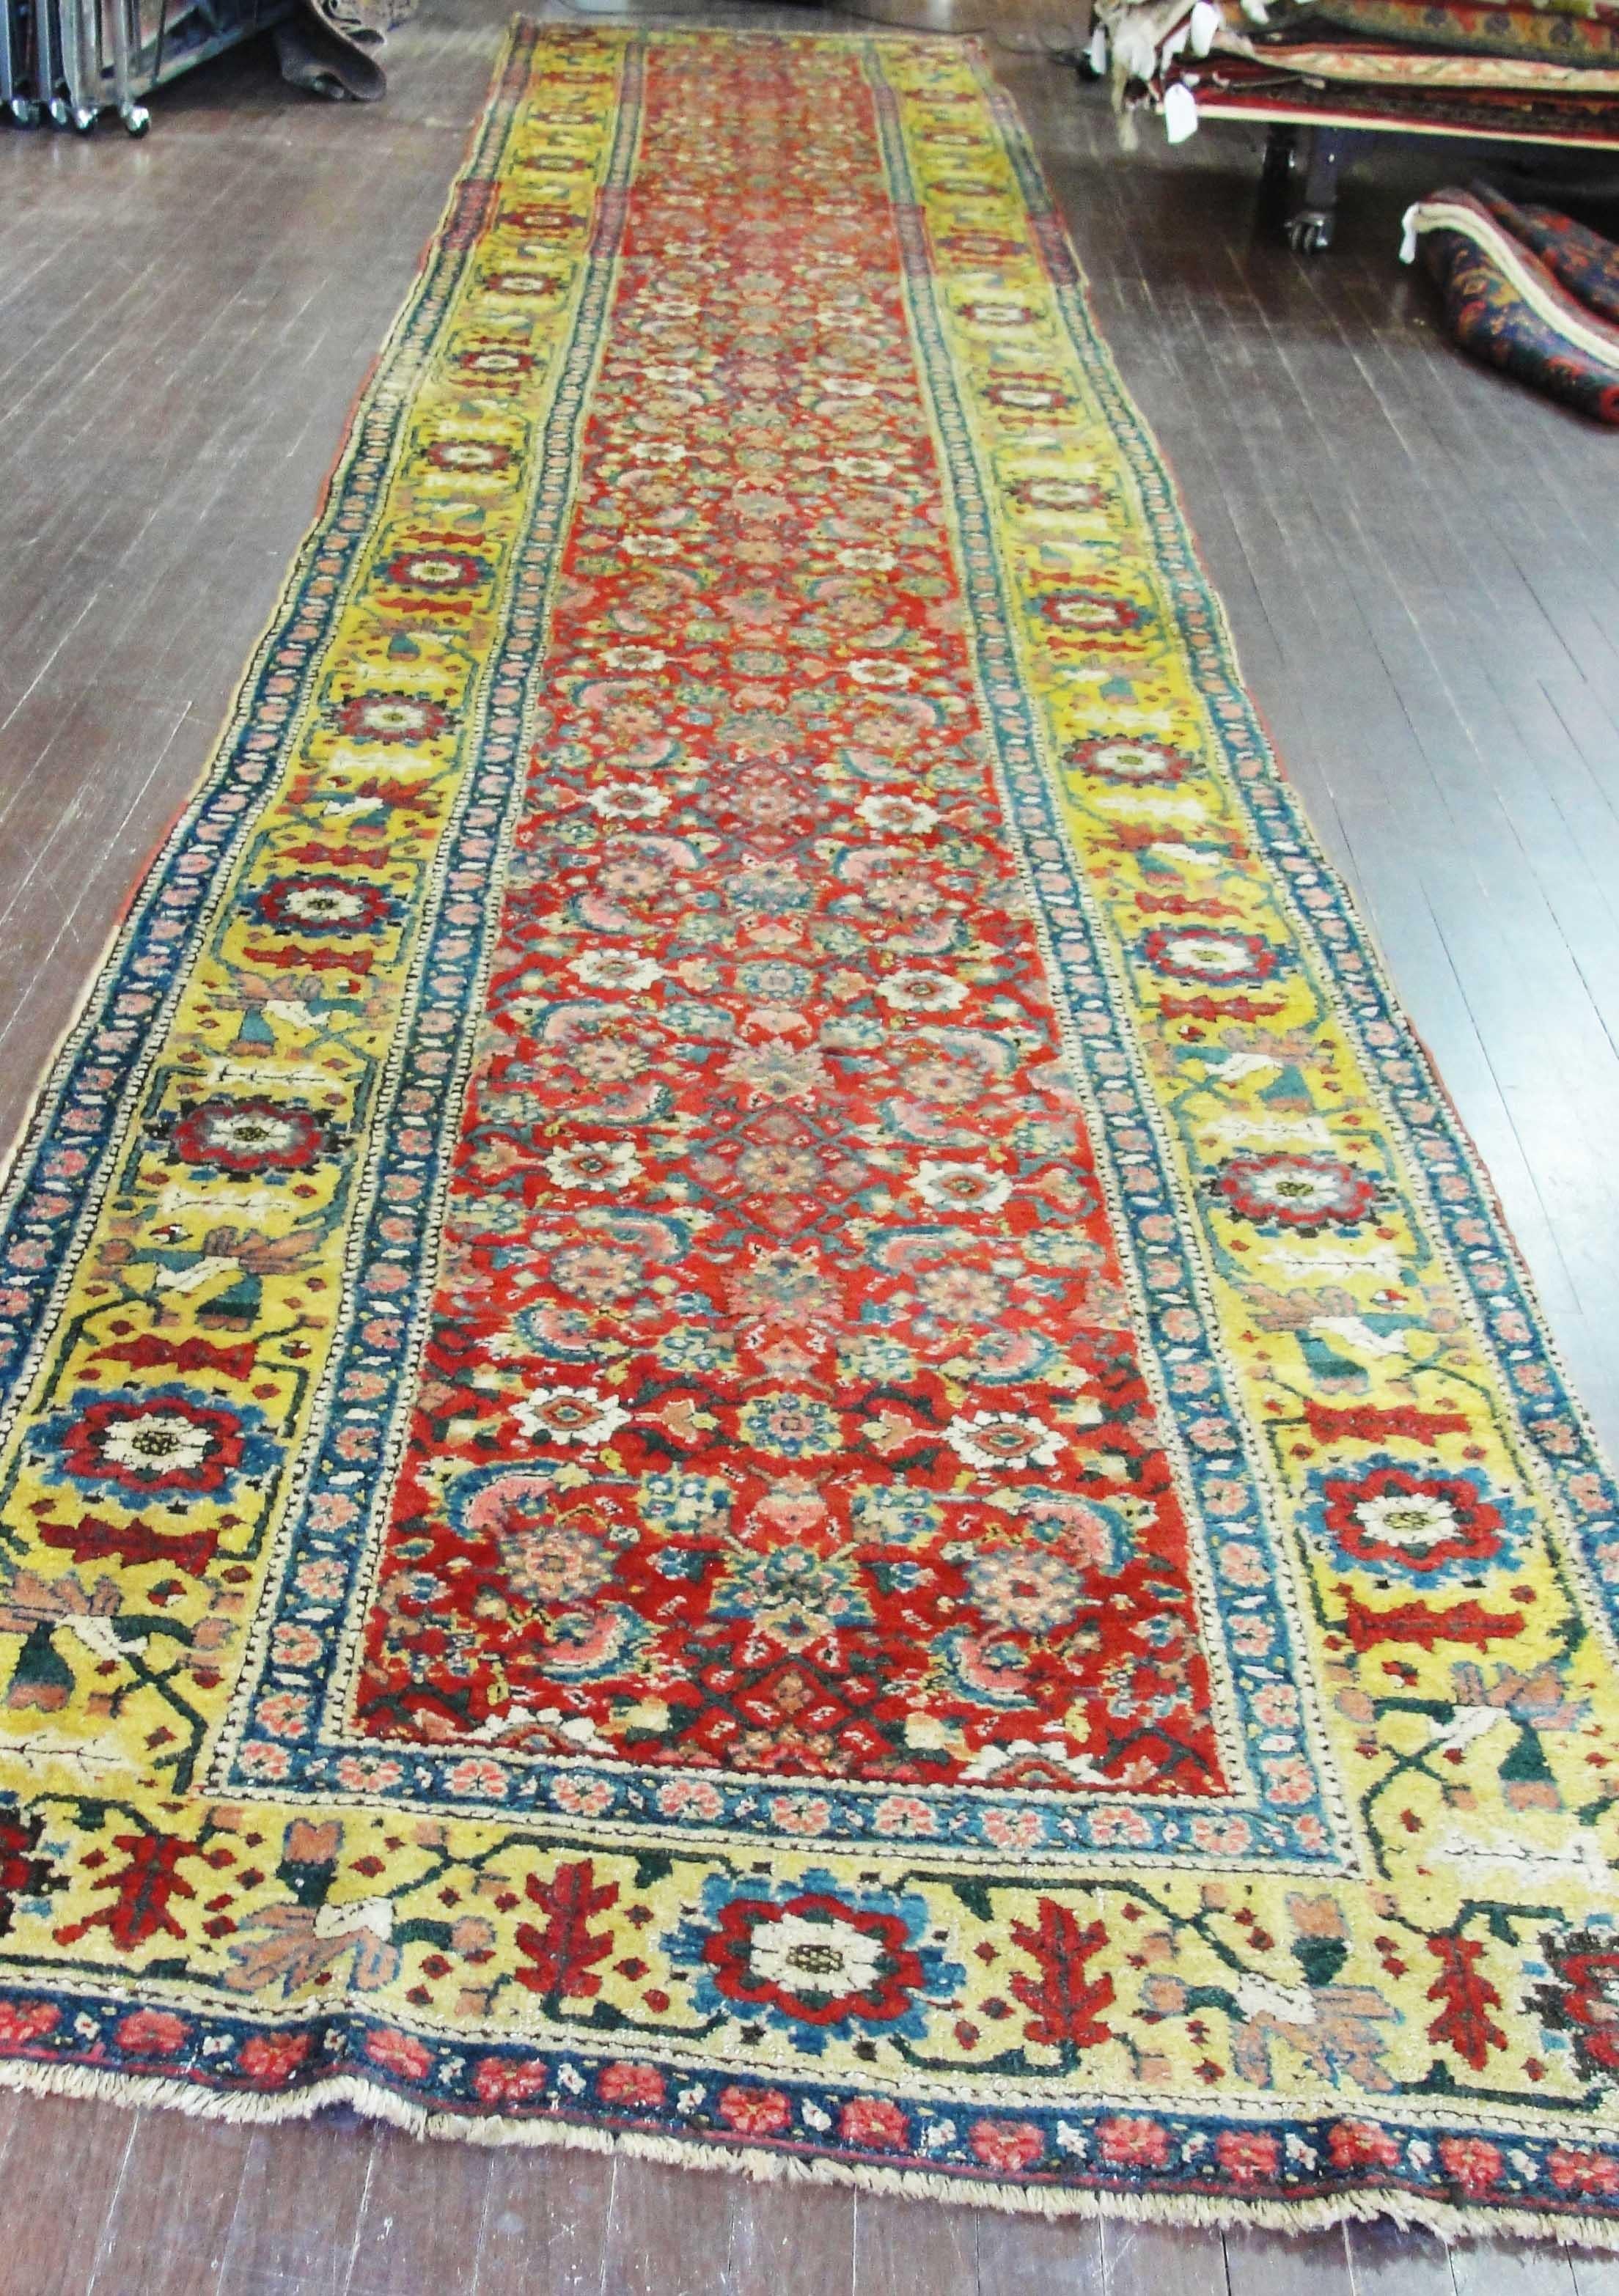  Antique Persian Bijar Runner Gallery Carpet In Excellent Condition For Sale In Evanston, IL